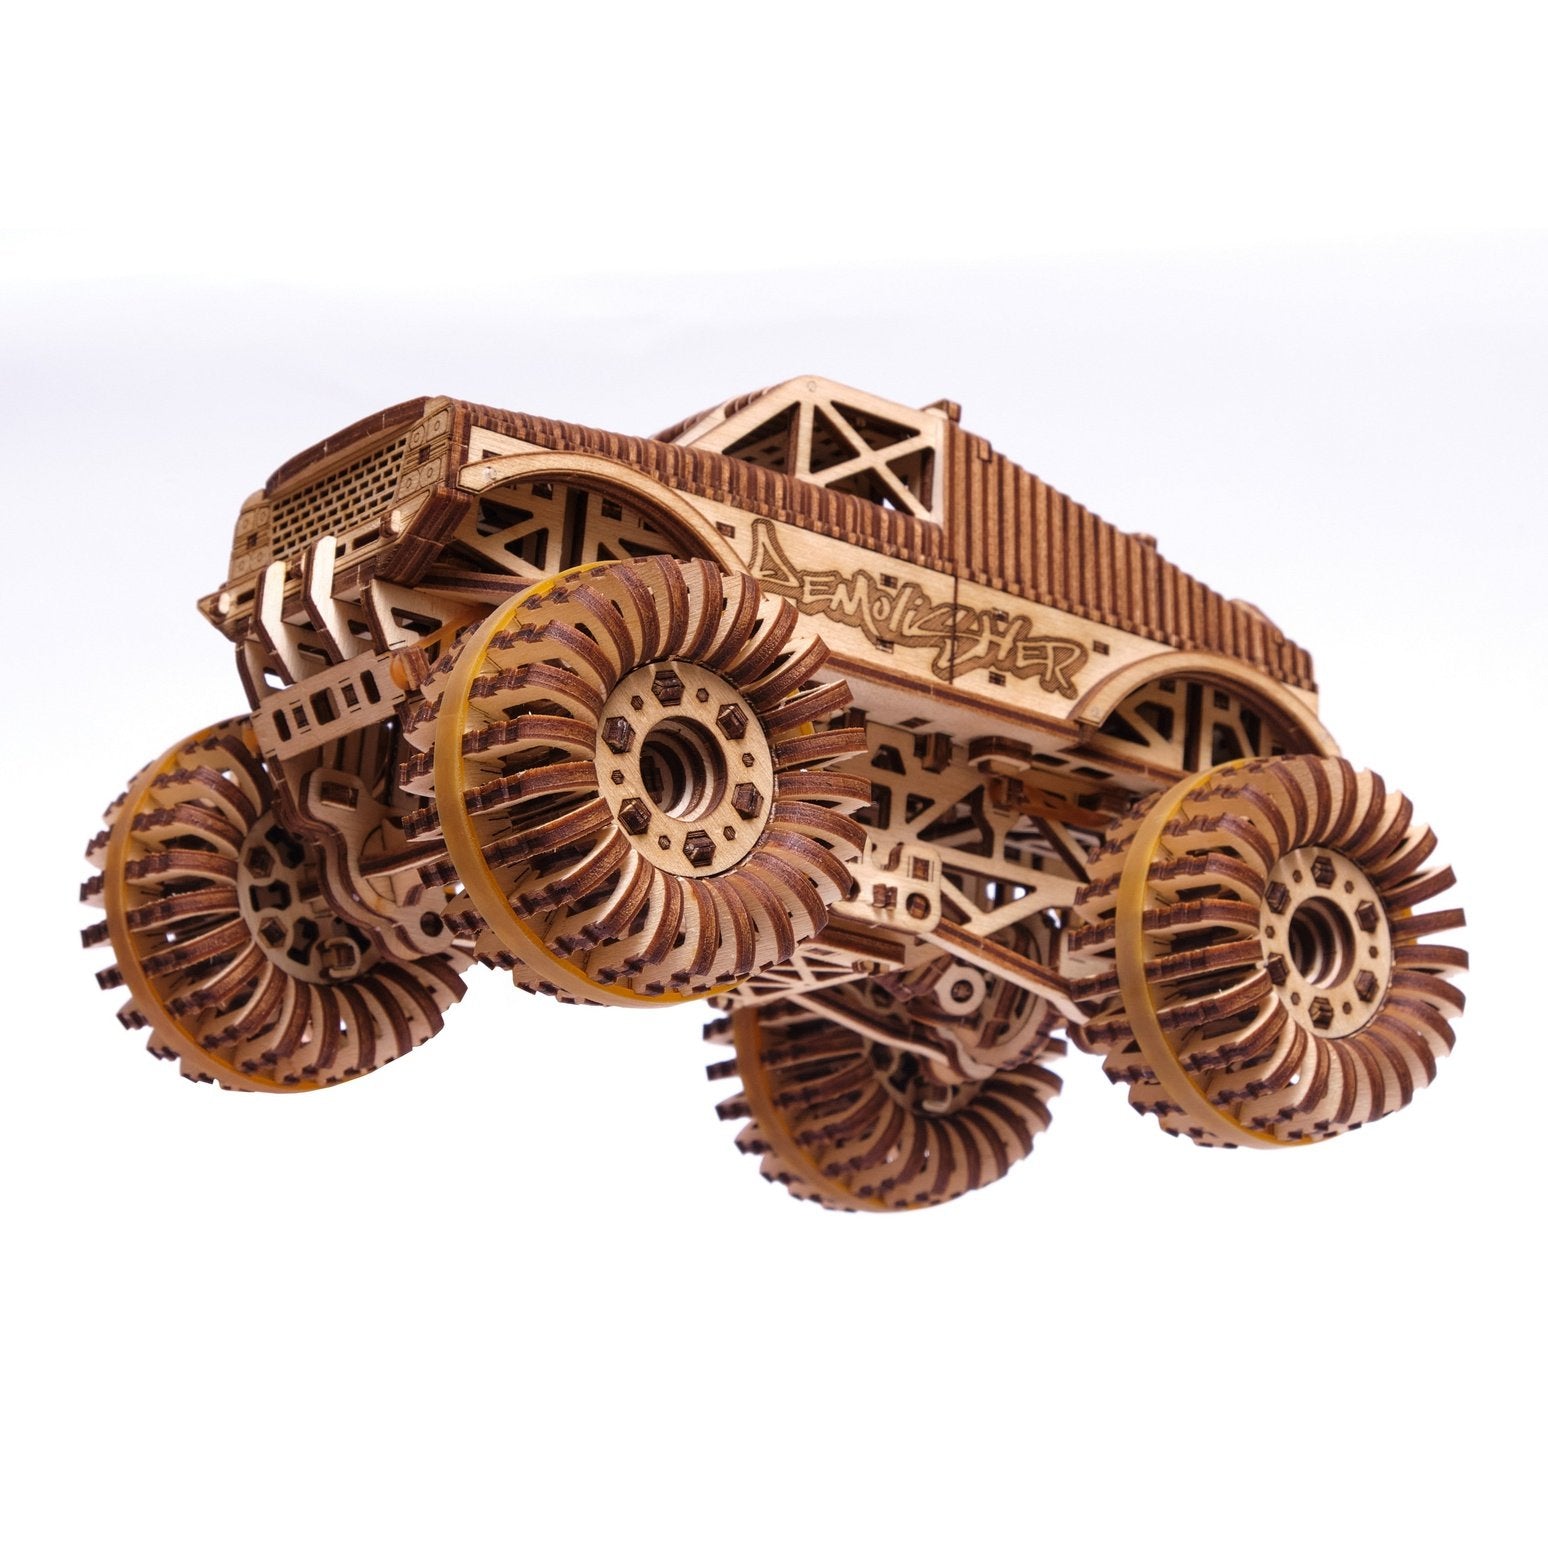 Wood Trick Monster Truck - Houten Modelbouw